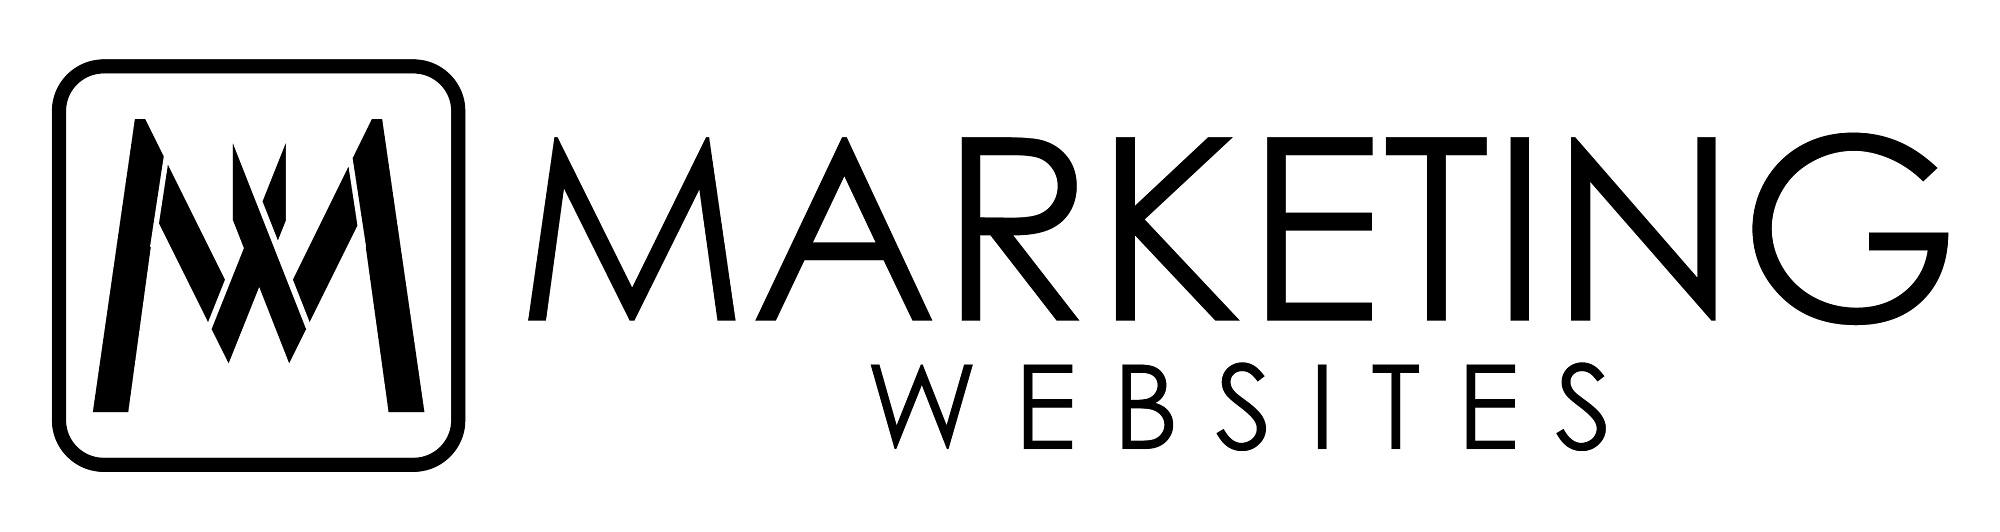 Marketing Websites Inc. Logo